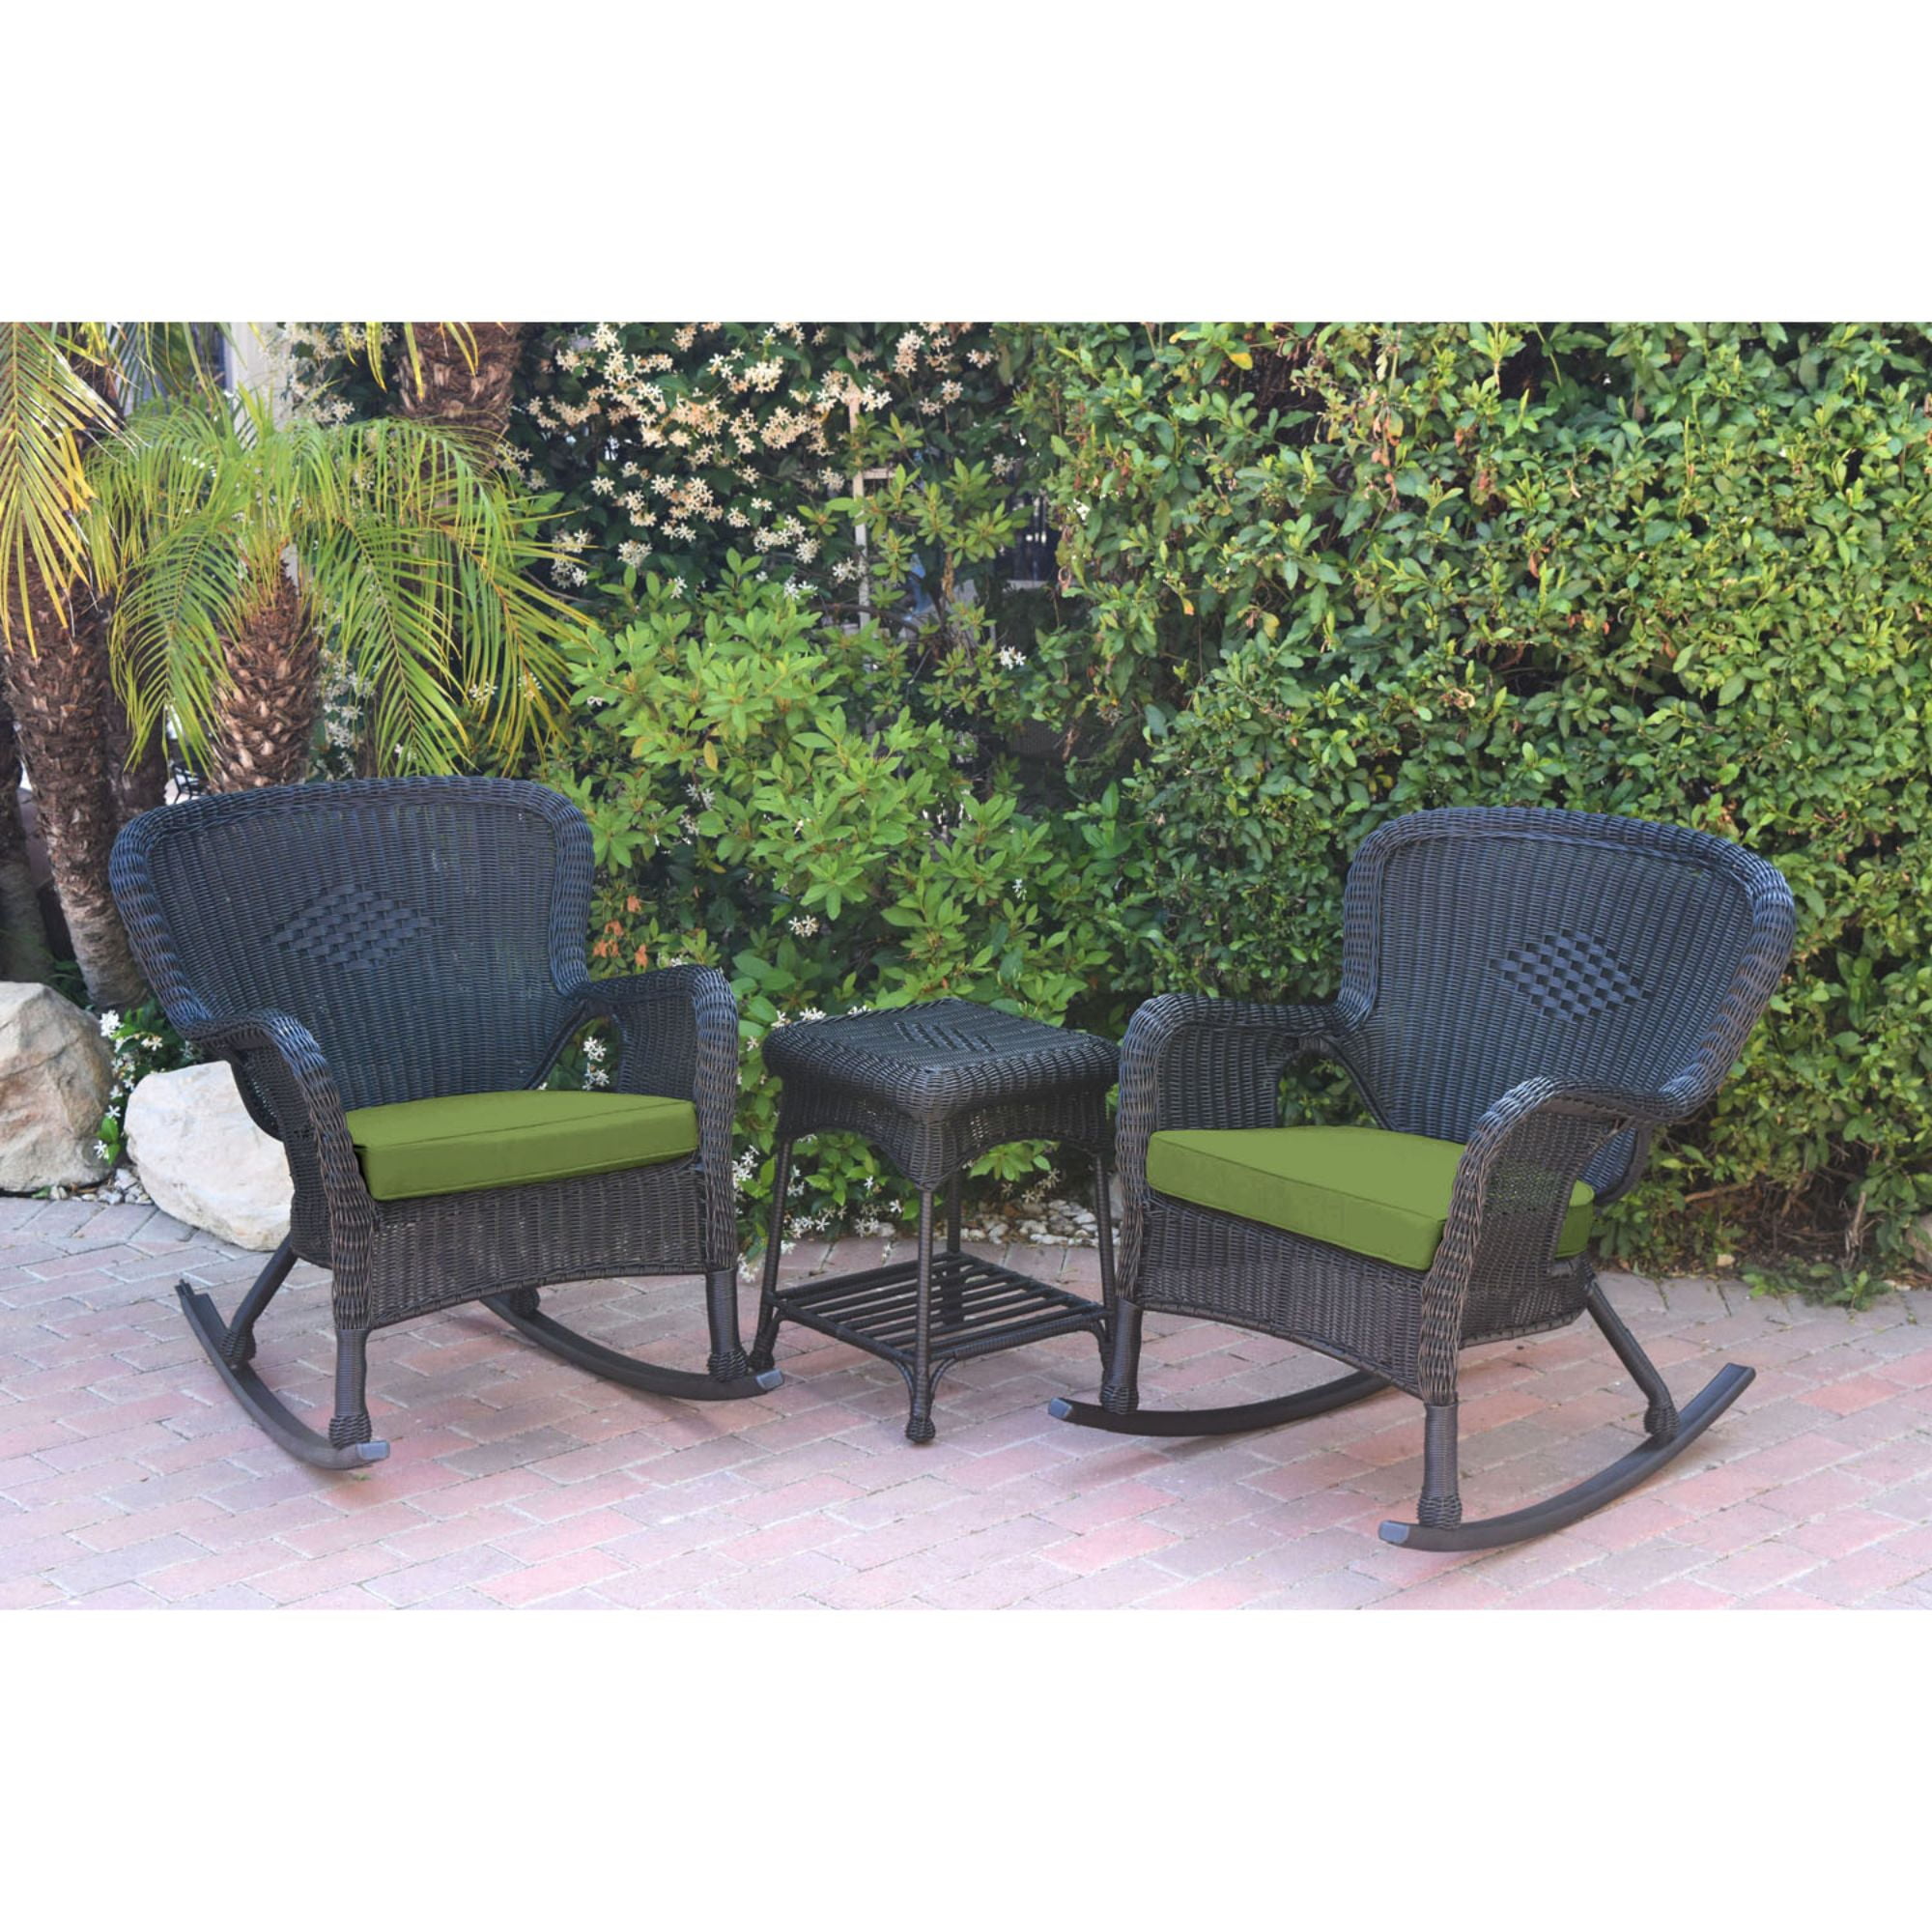 3-Piece Black Wicker Outdoor Furniture Patio Conversation Set - Sage